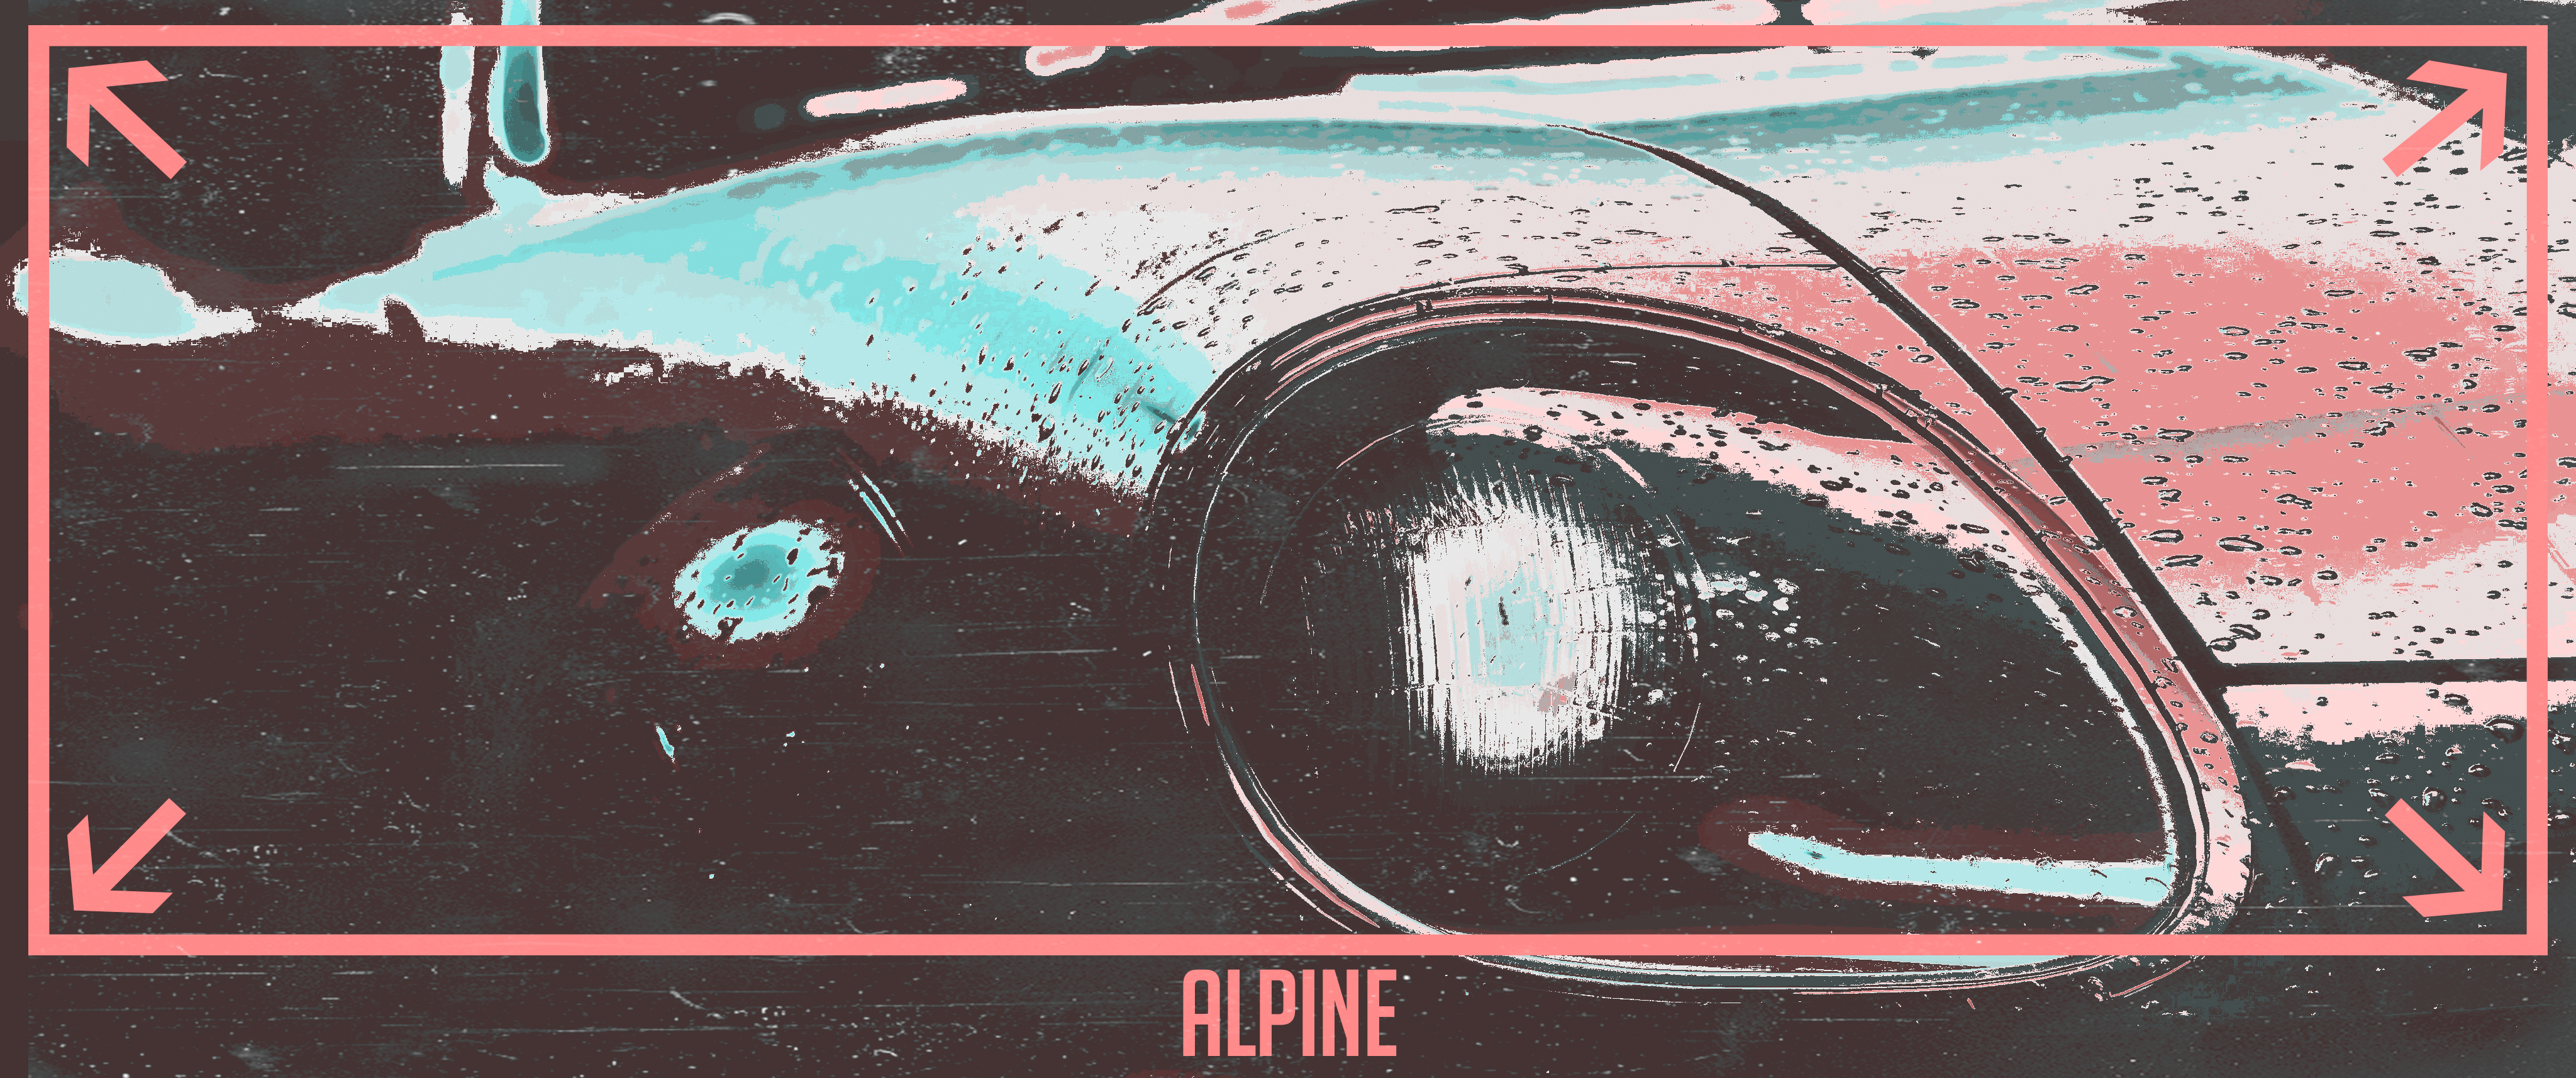 Alpine Vision Digital Art Car Vehicle Sports Car Supercars 4096x1714